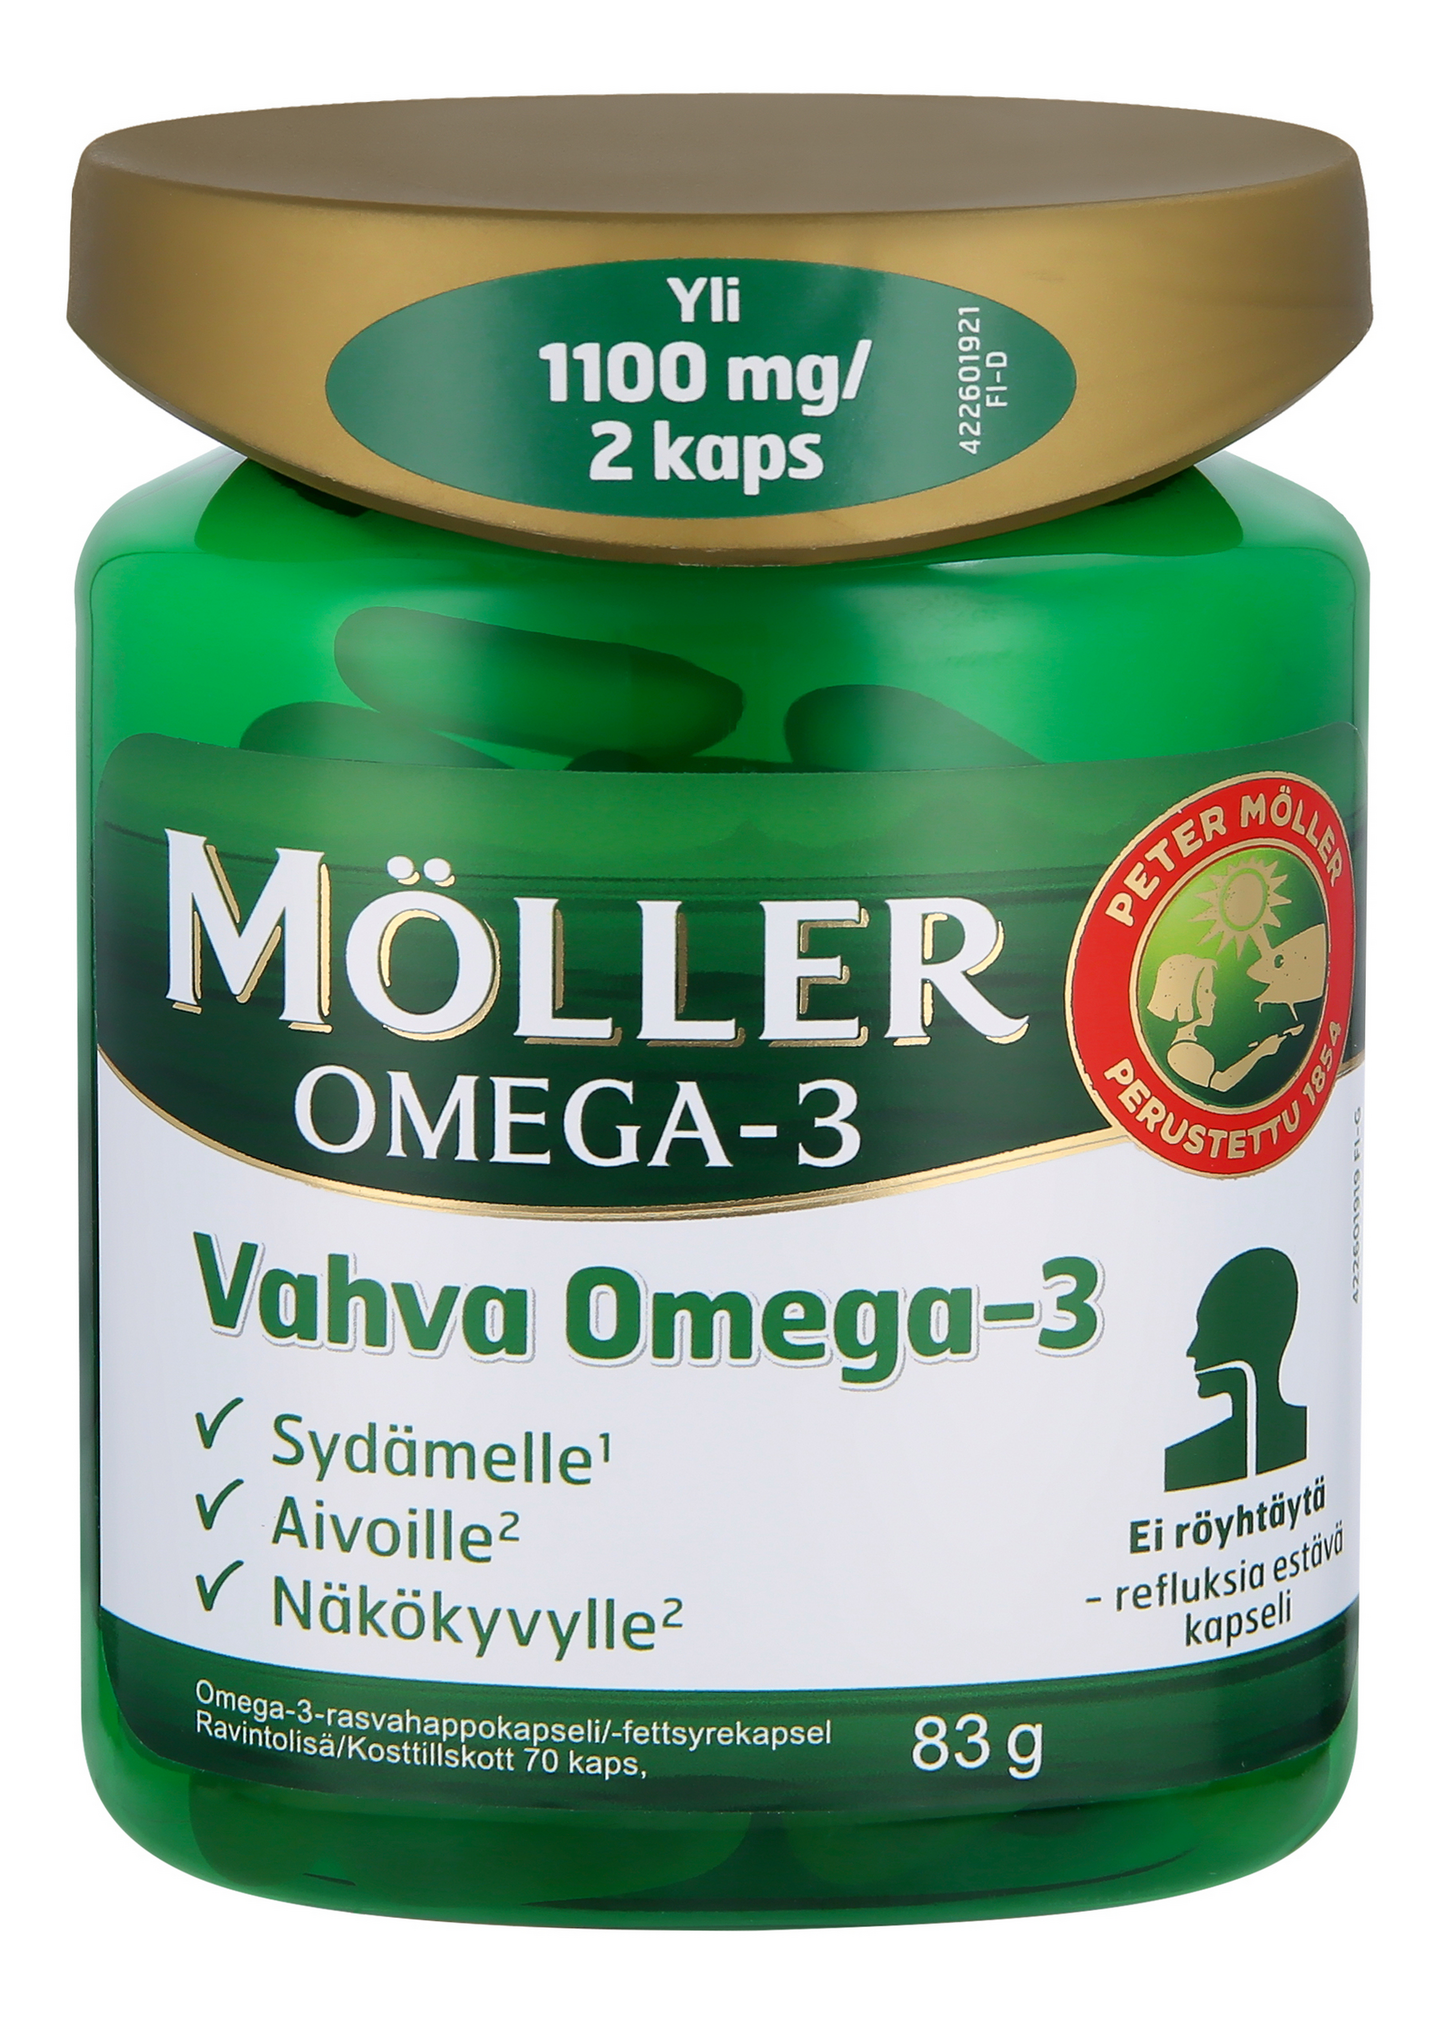 Moller vahva Omega-3